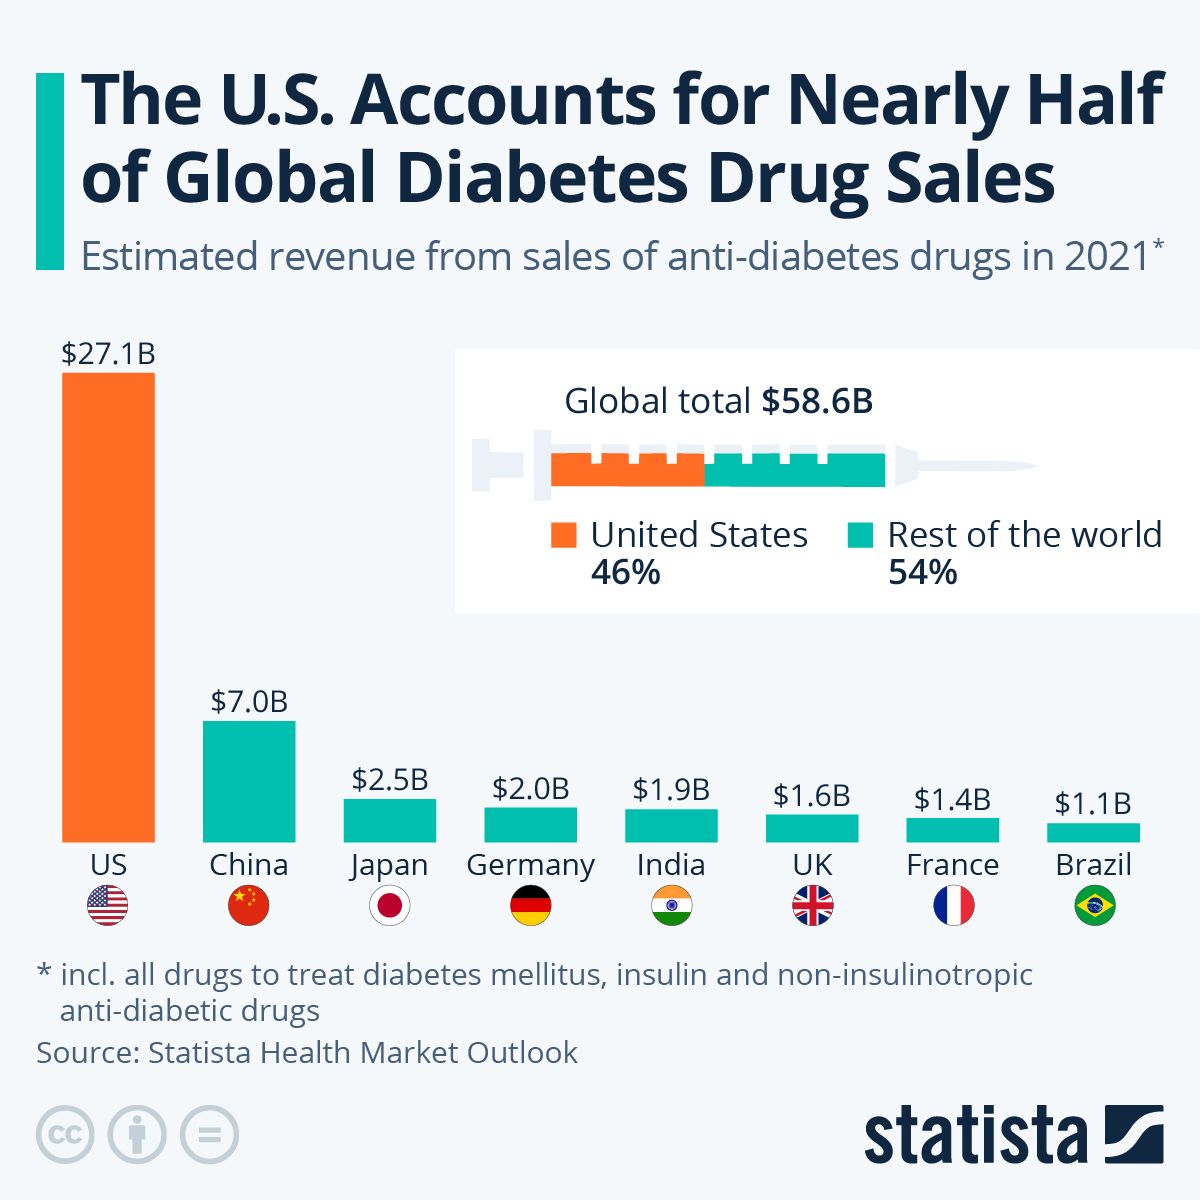 vanzari medicamente antidiabetice si insulina la nivel global